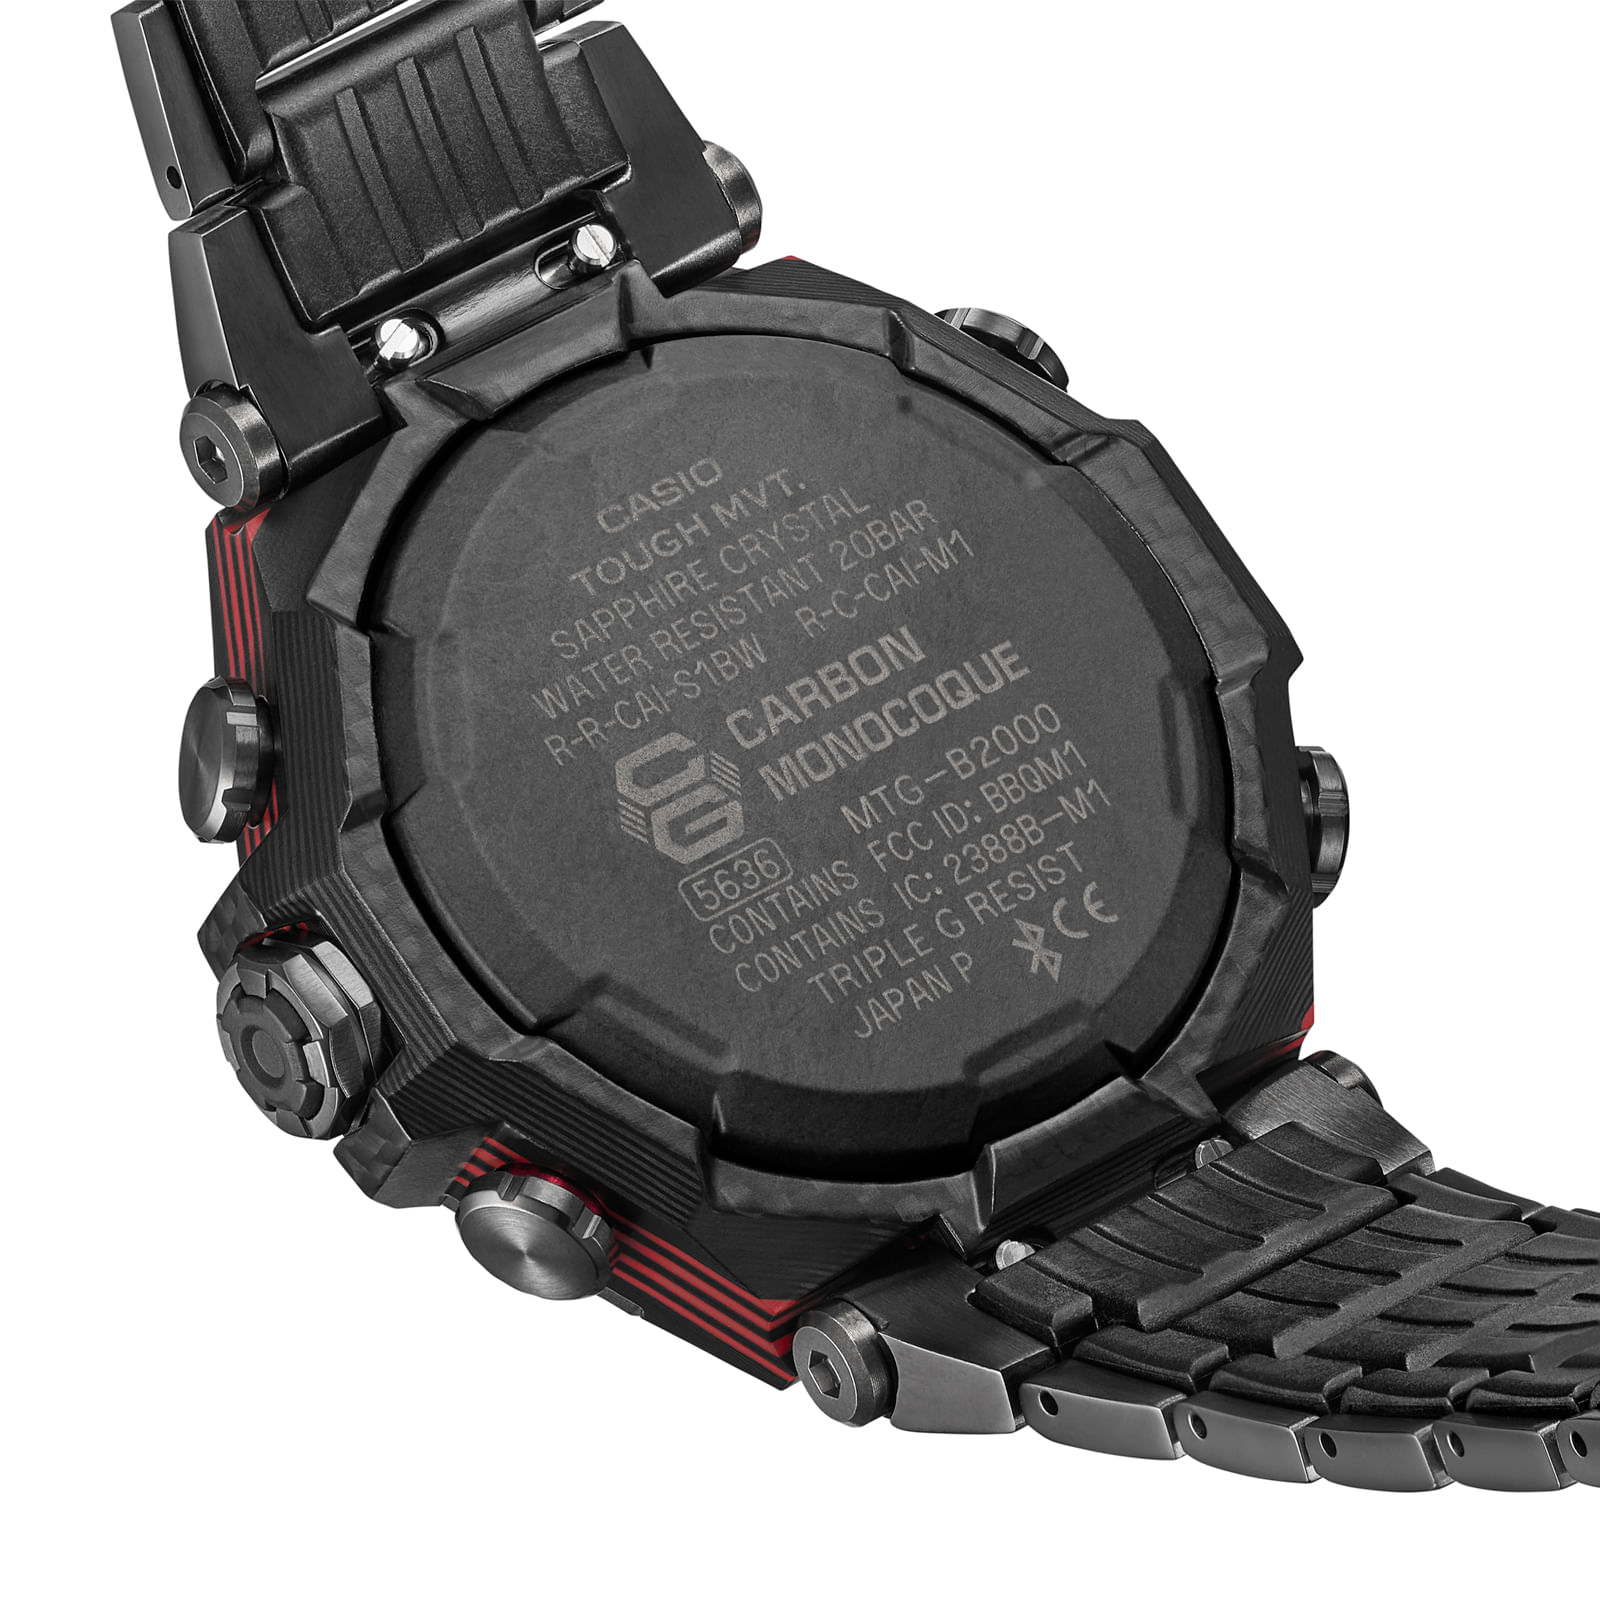 Reloj G-SHOCK MTG-B2000YBD-1A Carbono/Acero Hombre Negro